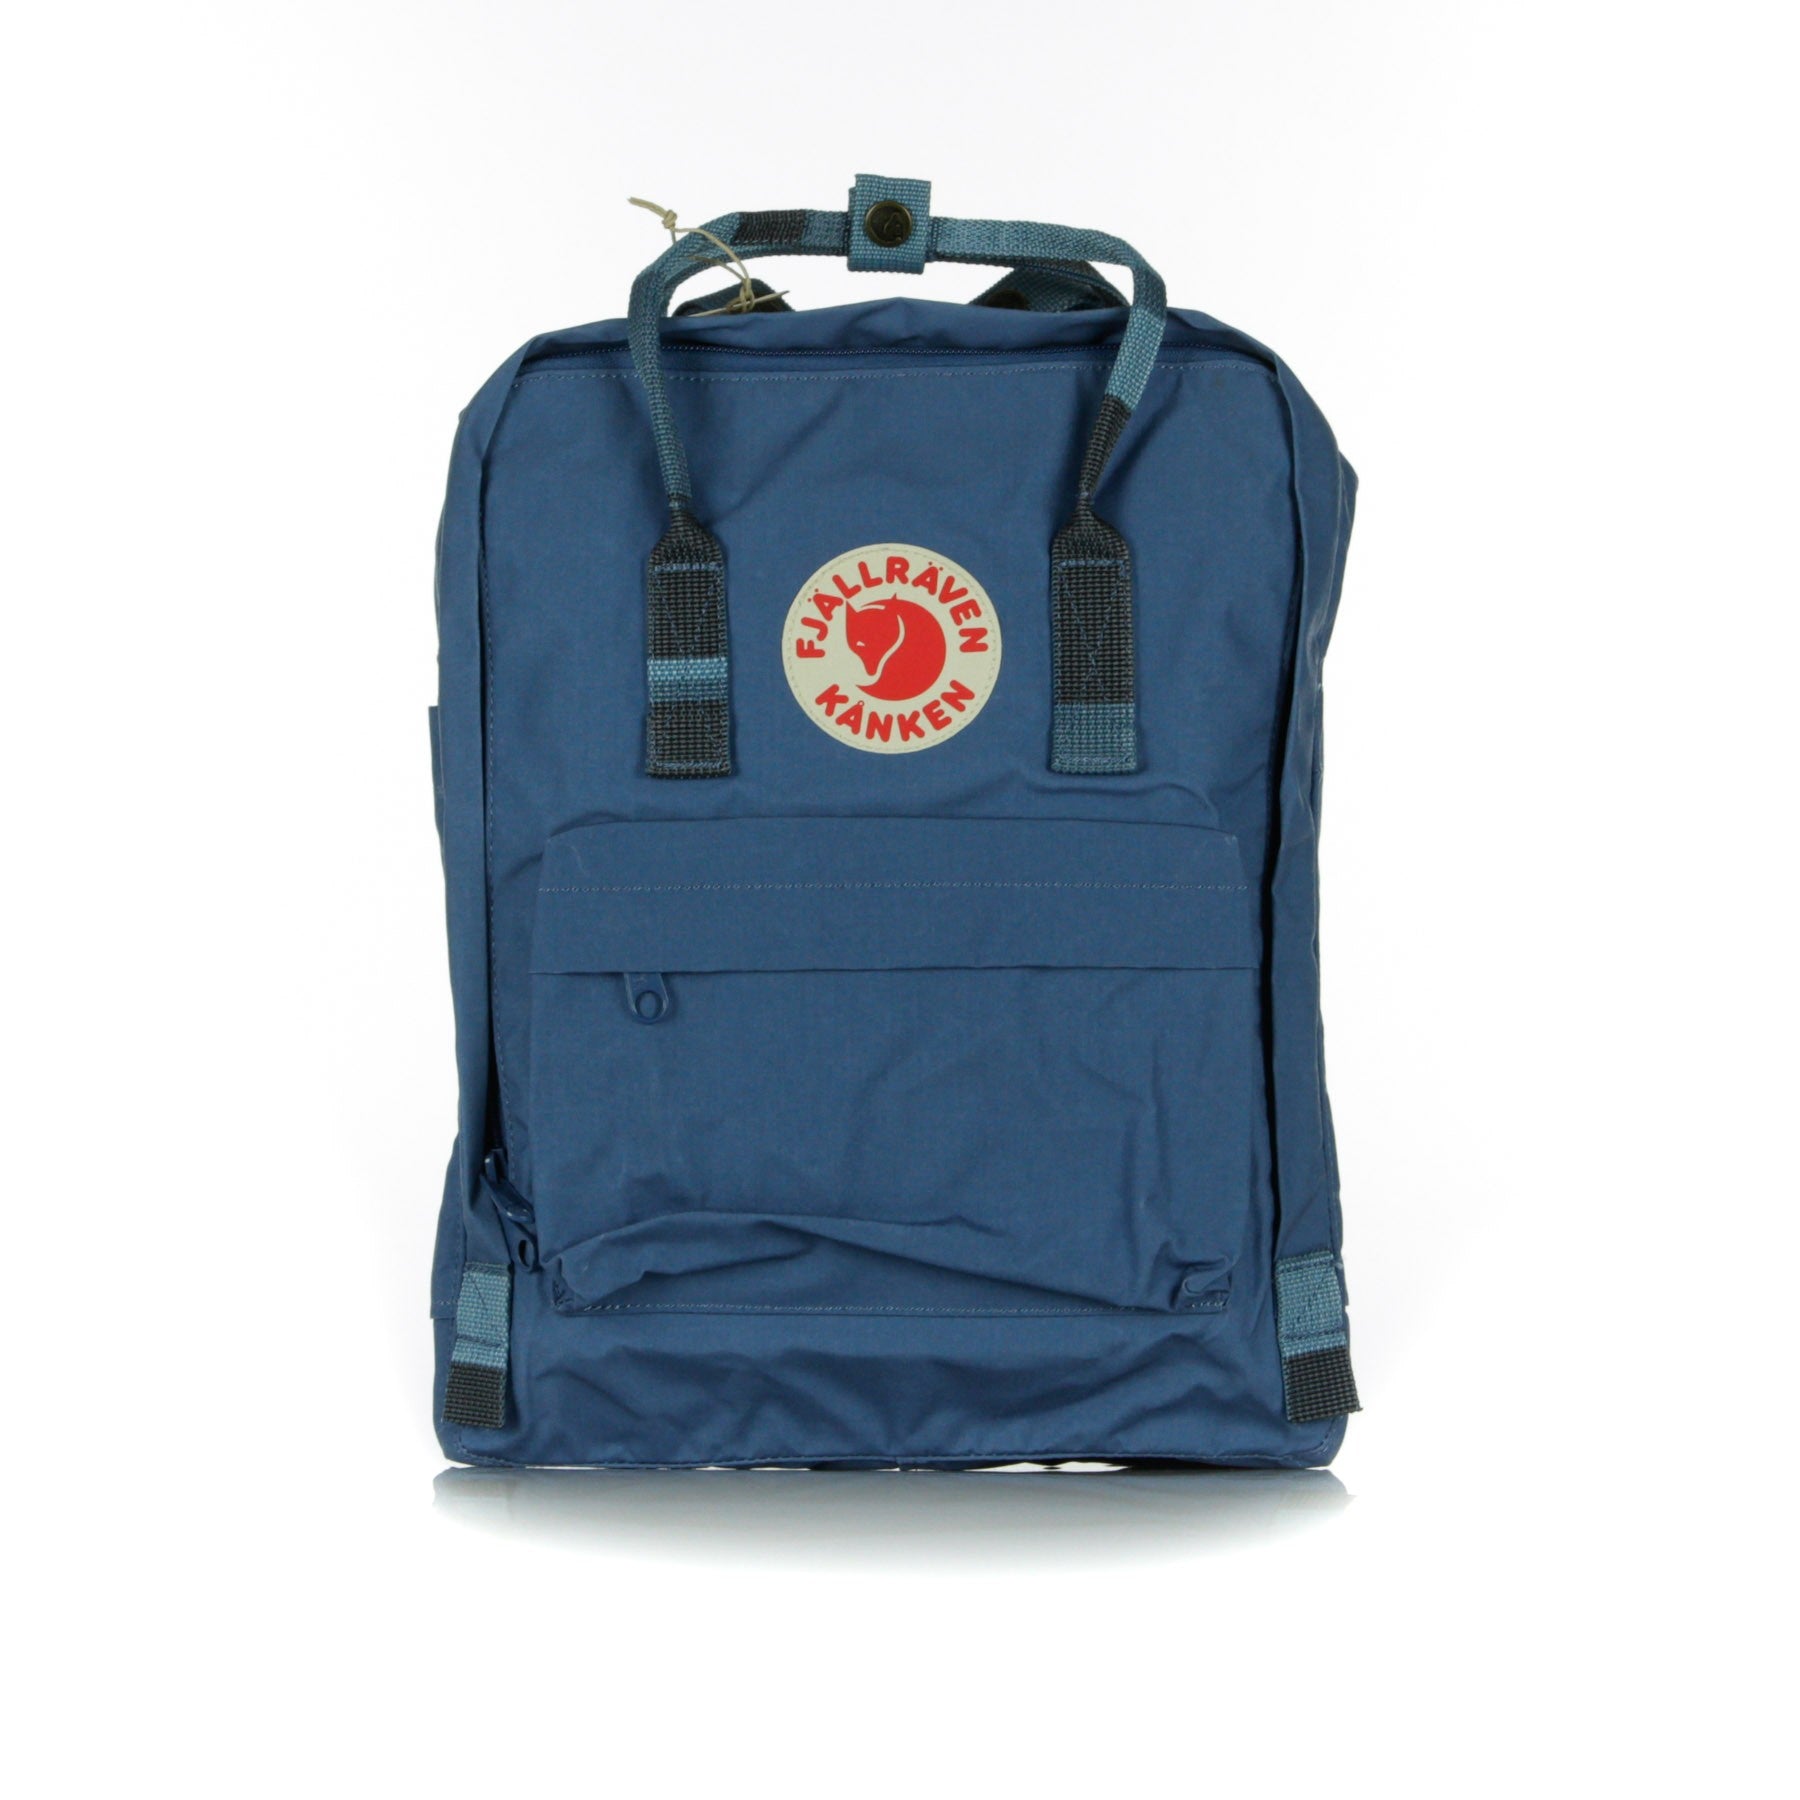 Unisex backpack Kanken Forest Green/ox Red